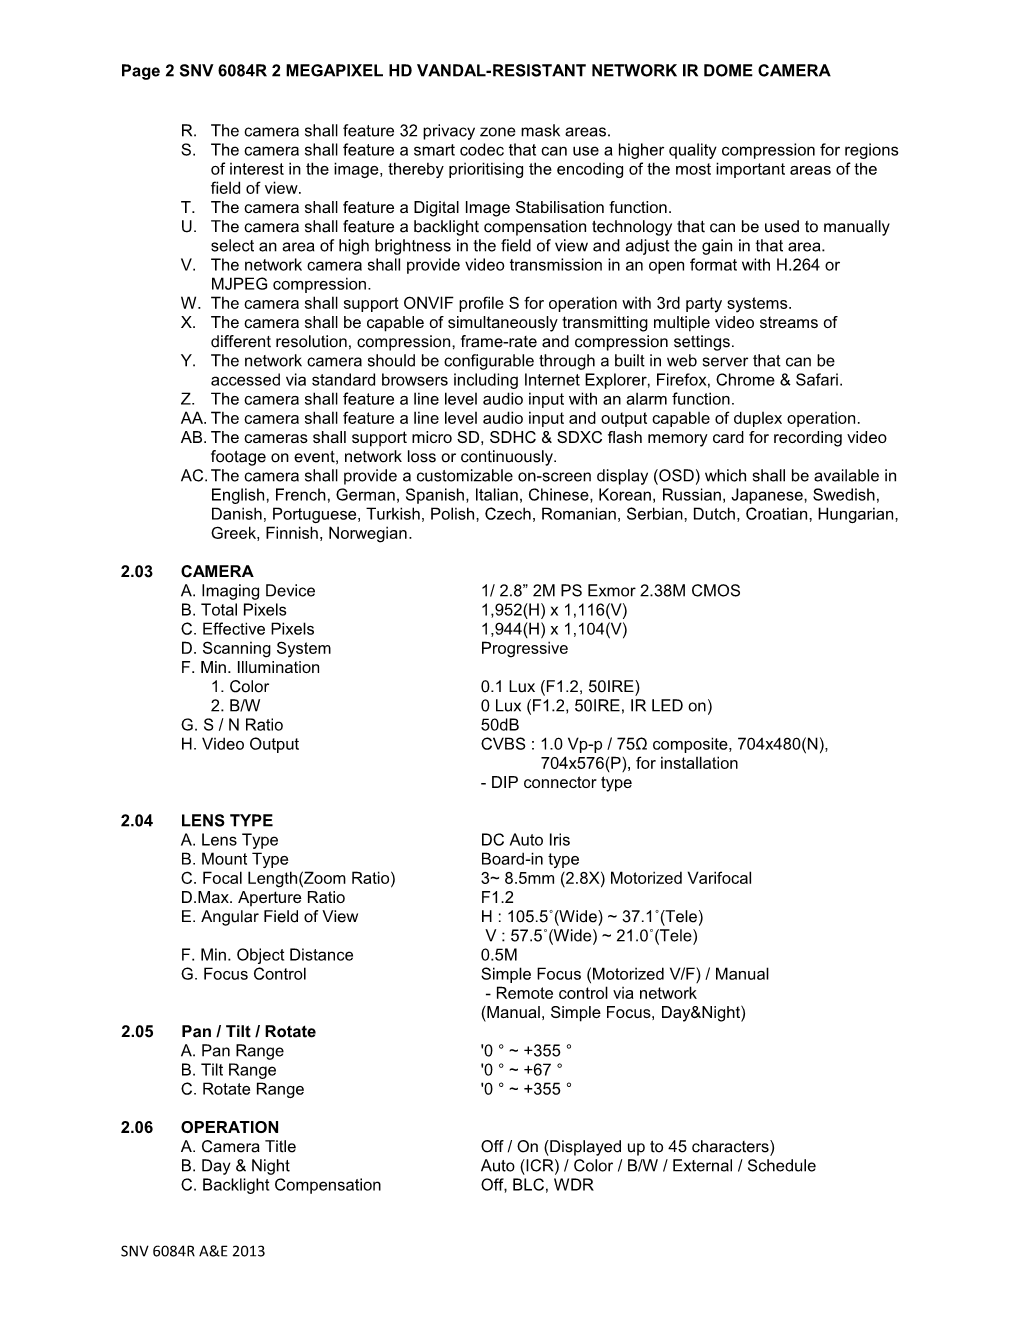 Page 1 SNV 6084R 2 MEGAPIXEL HD VANDAL-RESISTANT NETWORK IR DOME CAMERA